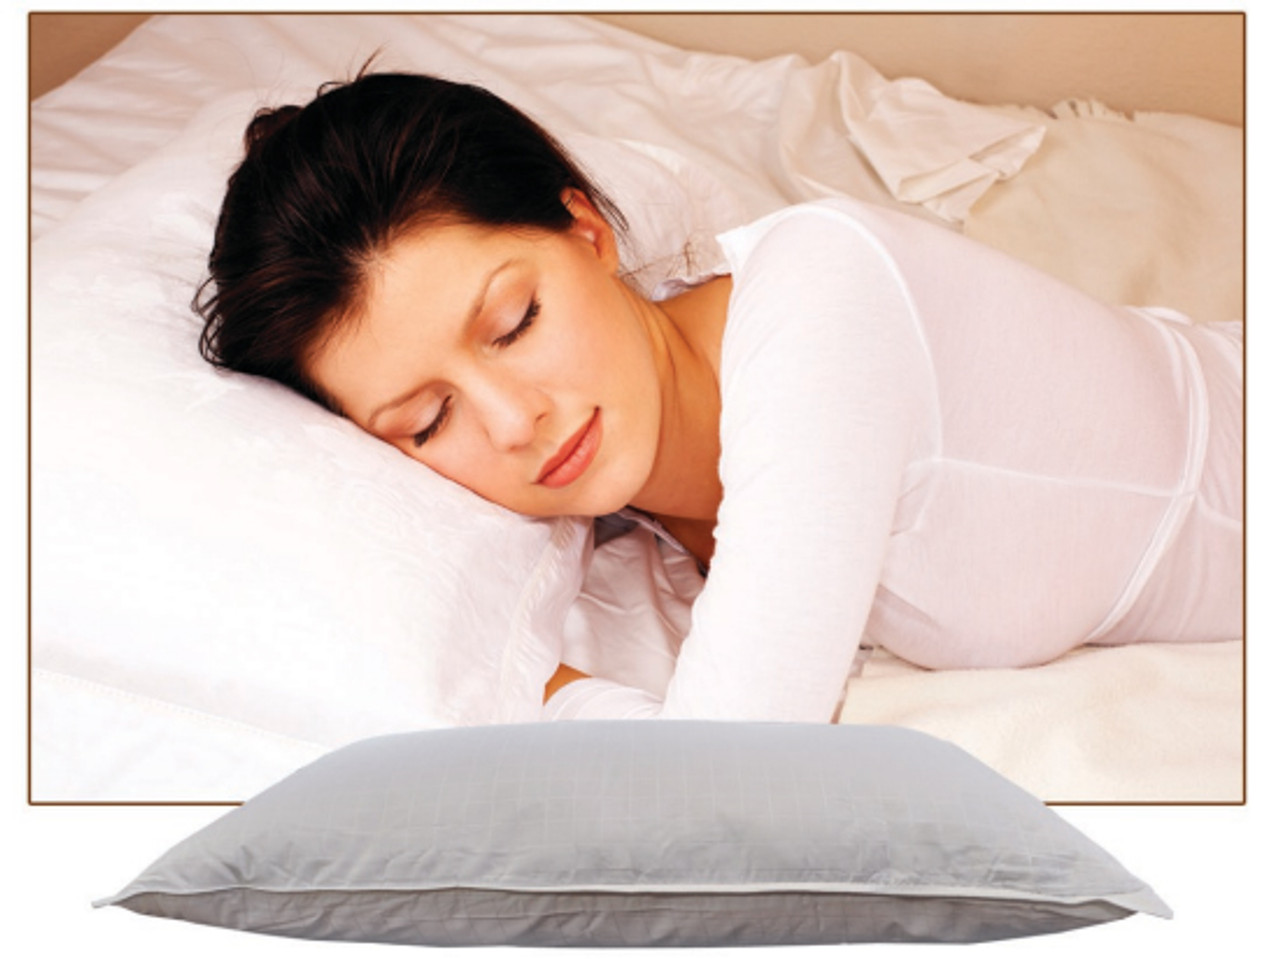 Thomasville Exhilarate Micro Denier Fiber Pillow 2 Pack|boyd specialty sleep pillows, thomasville, exhilarate, synthetic, pillows, hypo-allergenic, micro-denier fiber